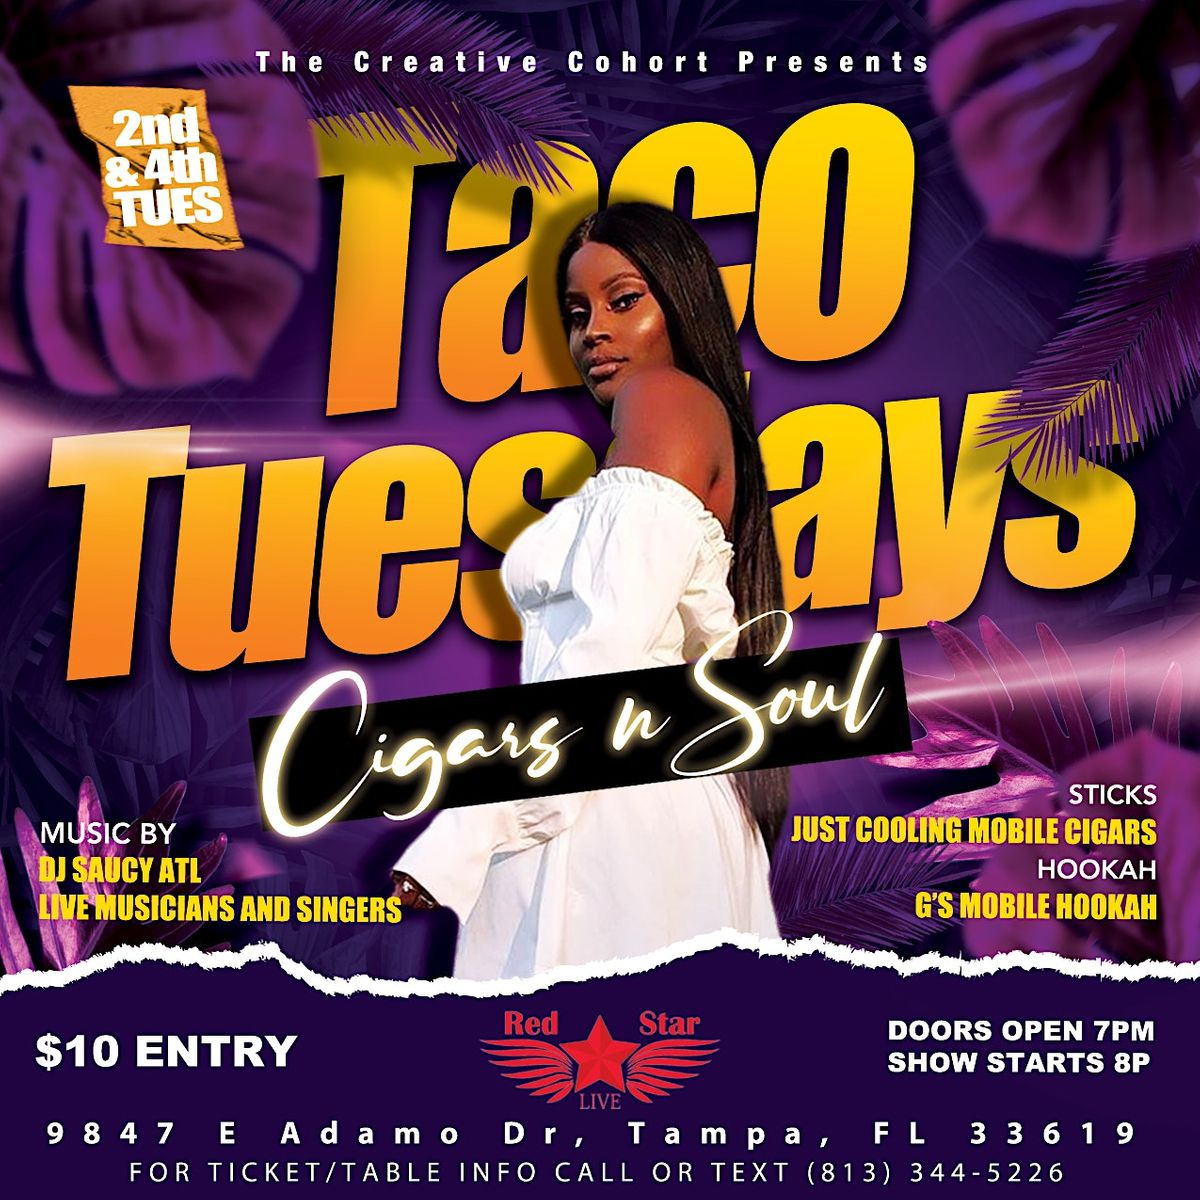 CIGARS N' SOUL: Taco Tuesdays @ Red Star Bar & Grill-Tampa, FL